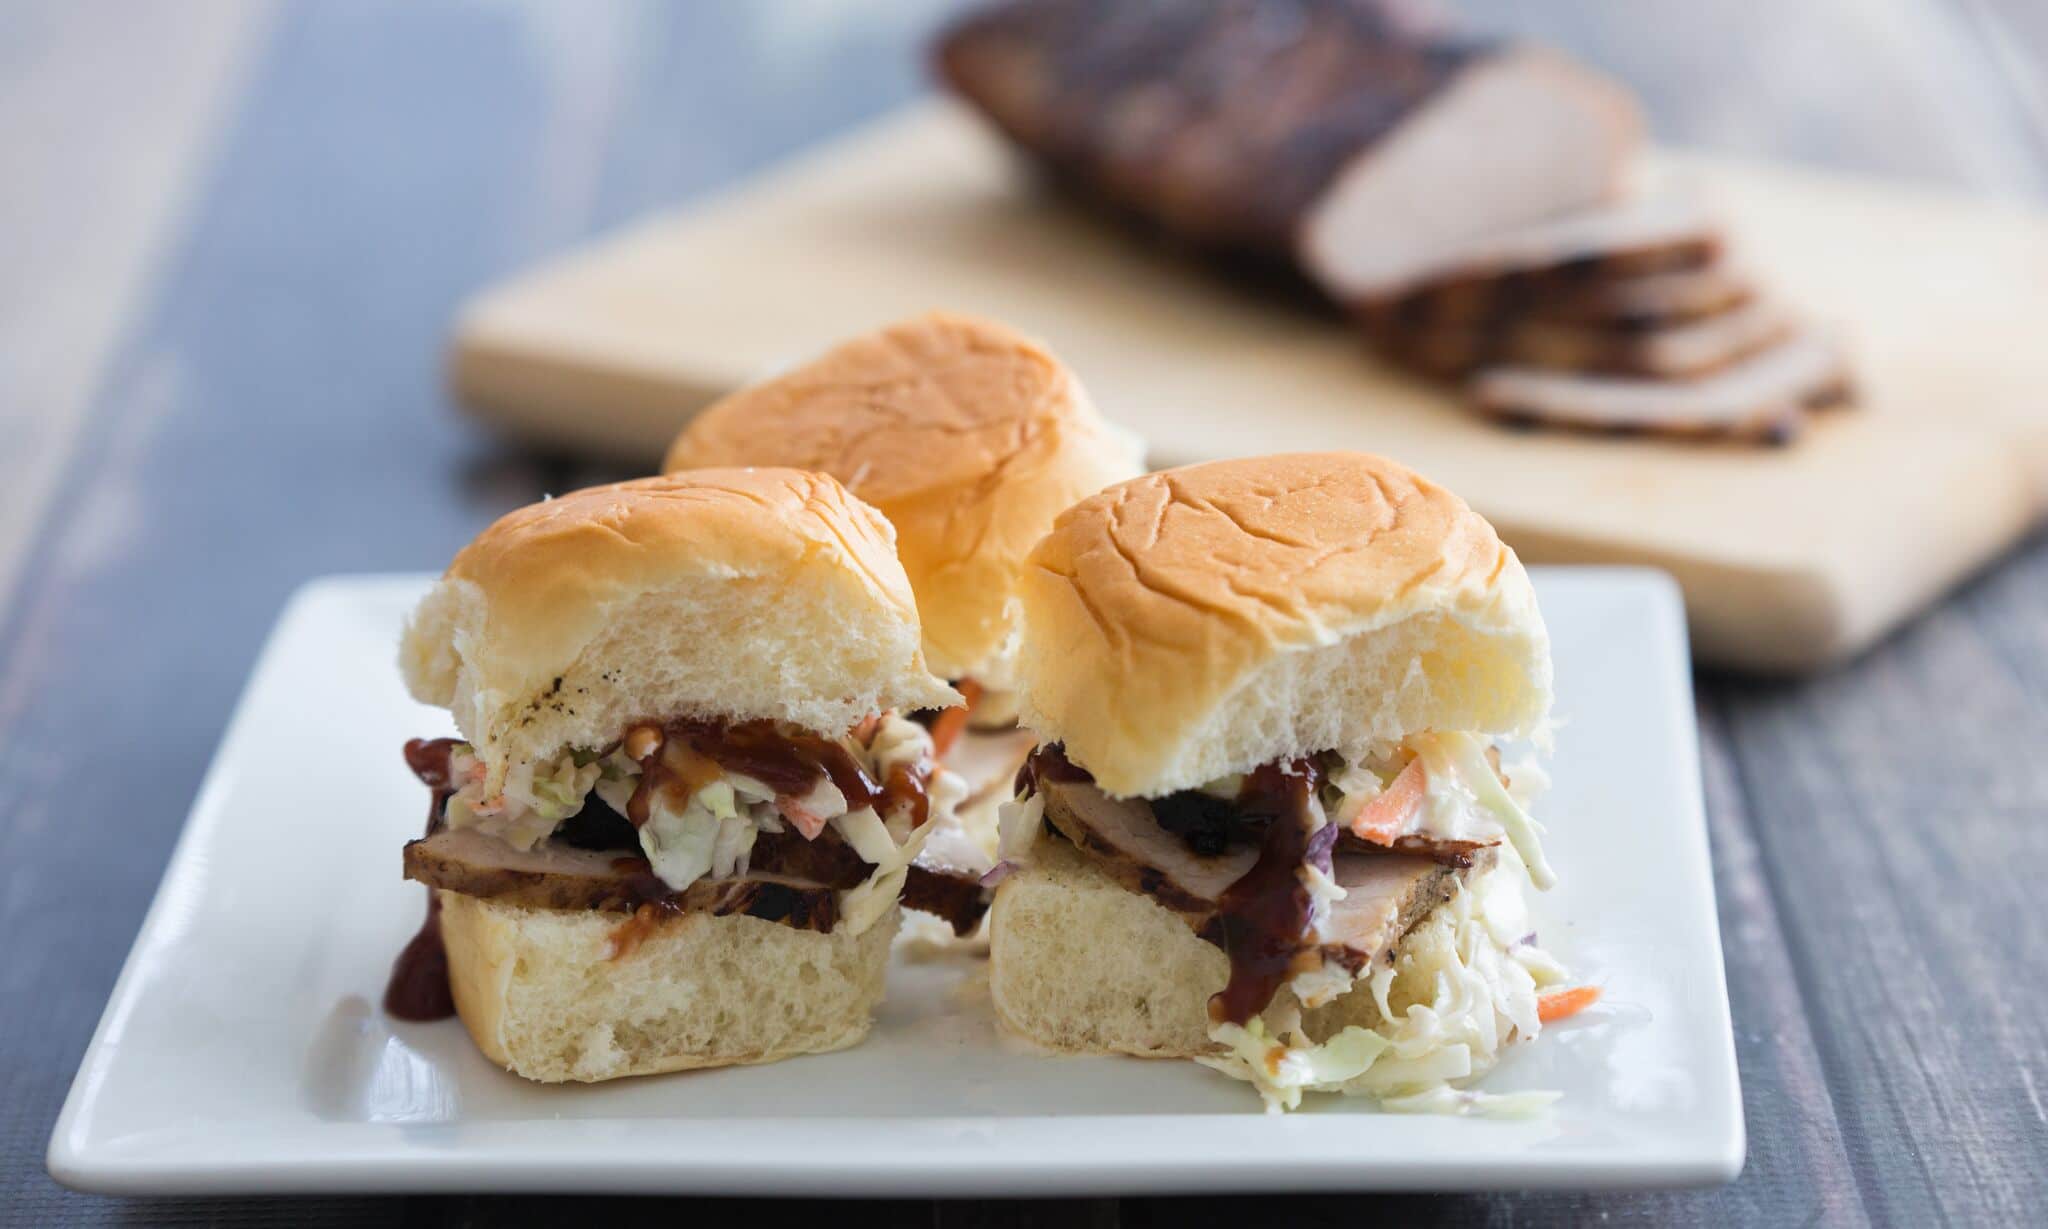 Serve pork sliders with slaw on Hawaiian rolls. 